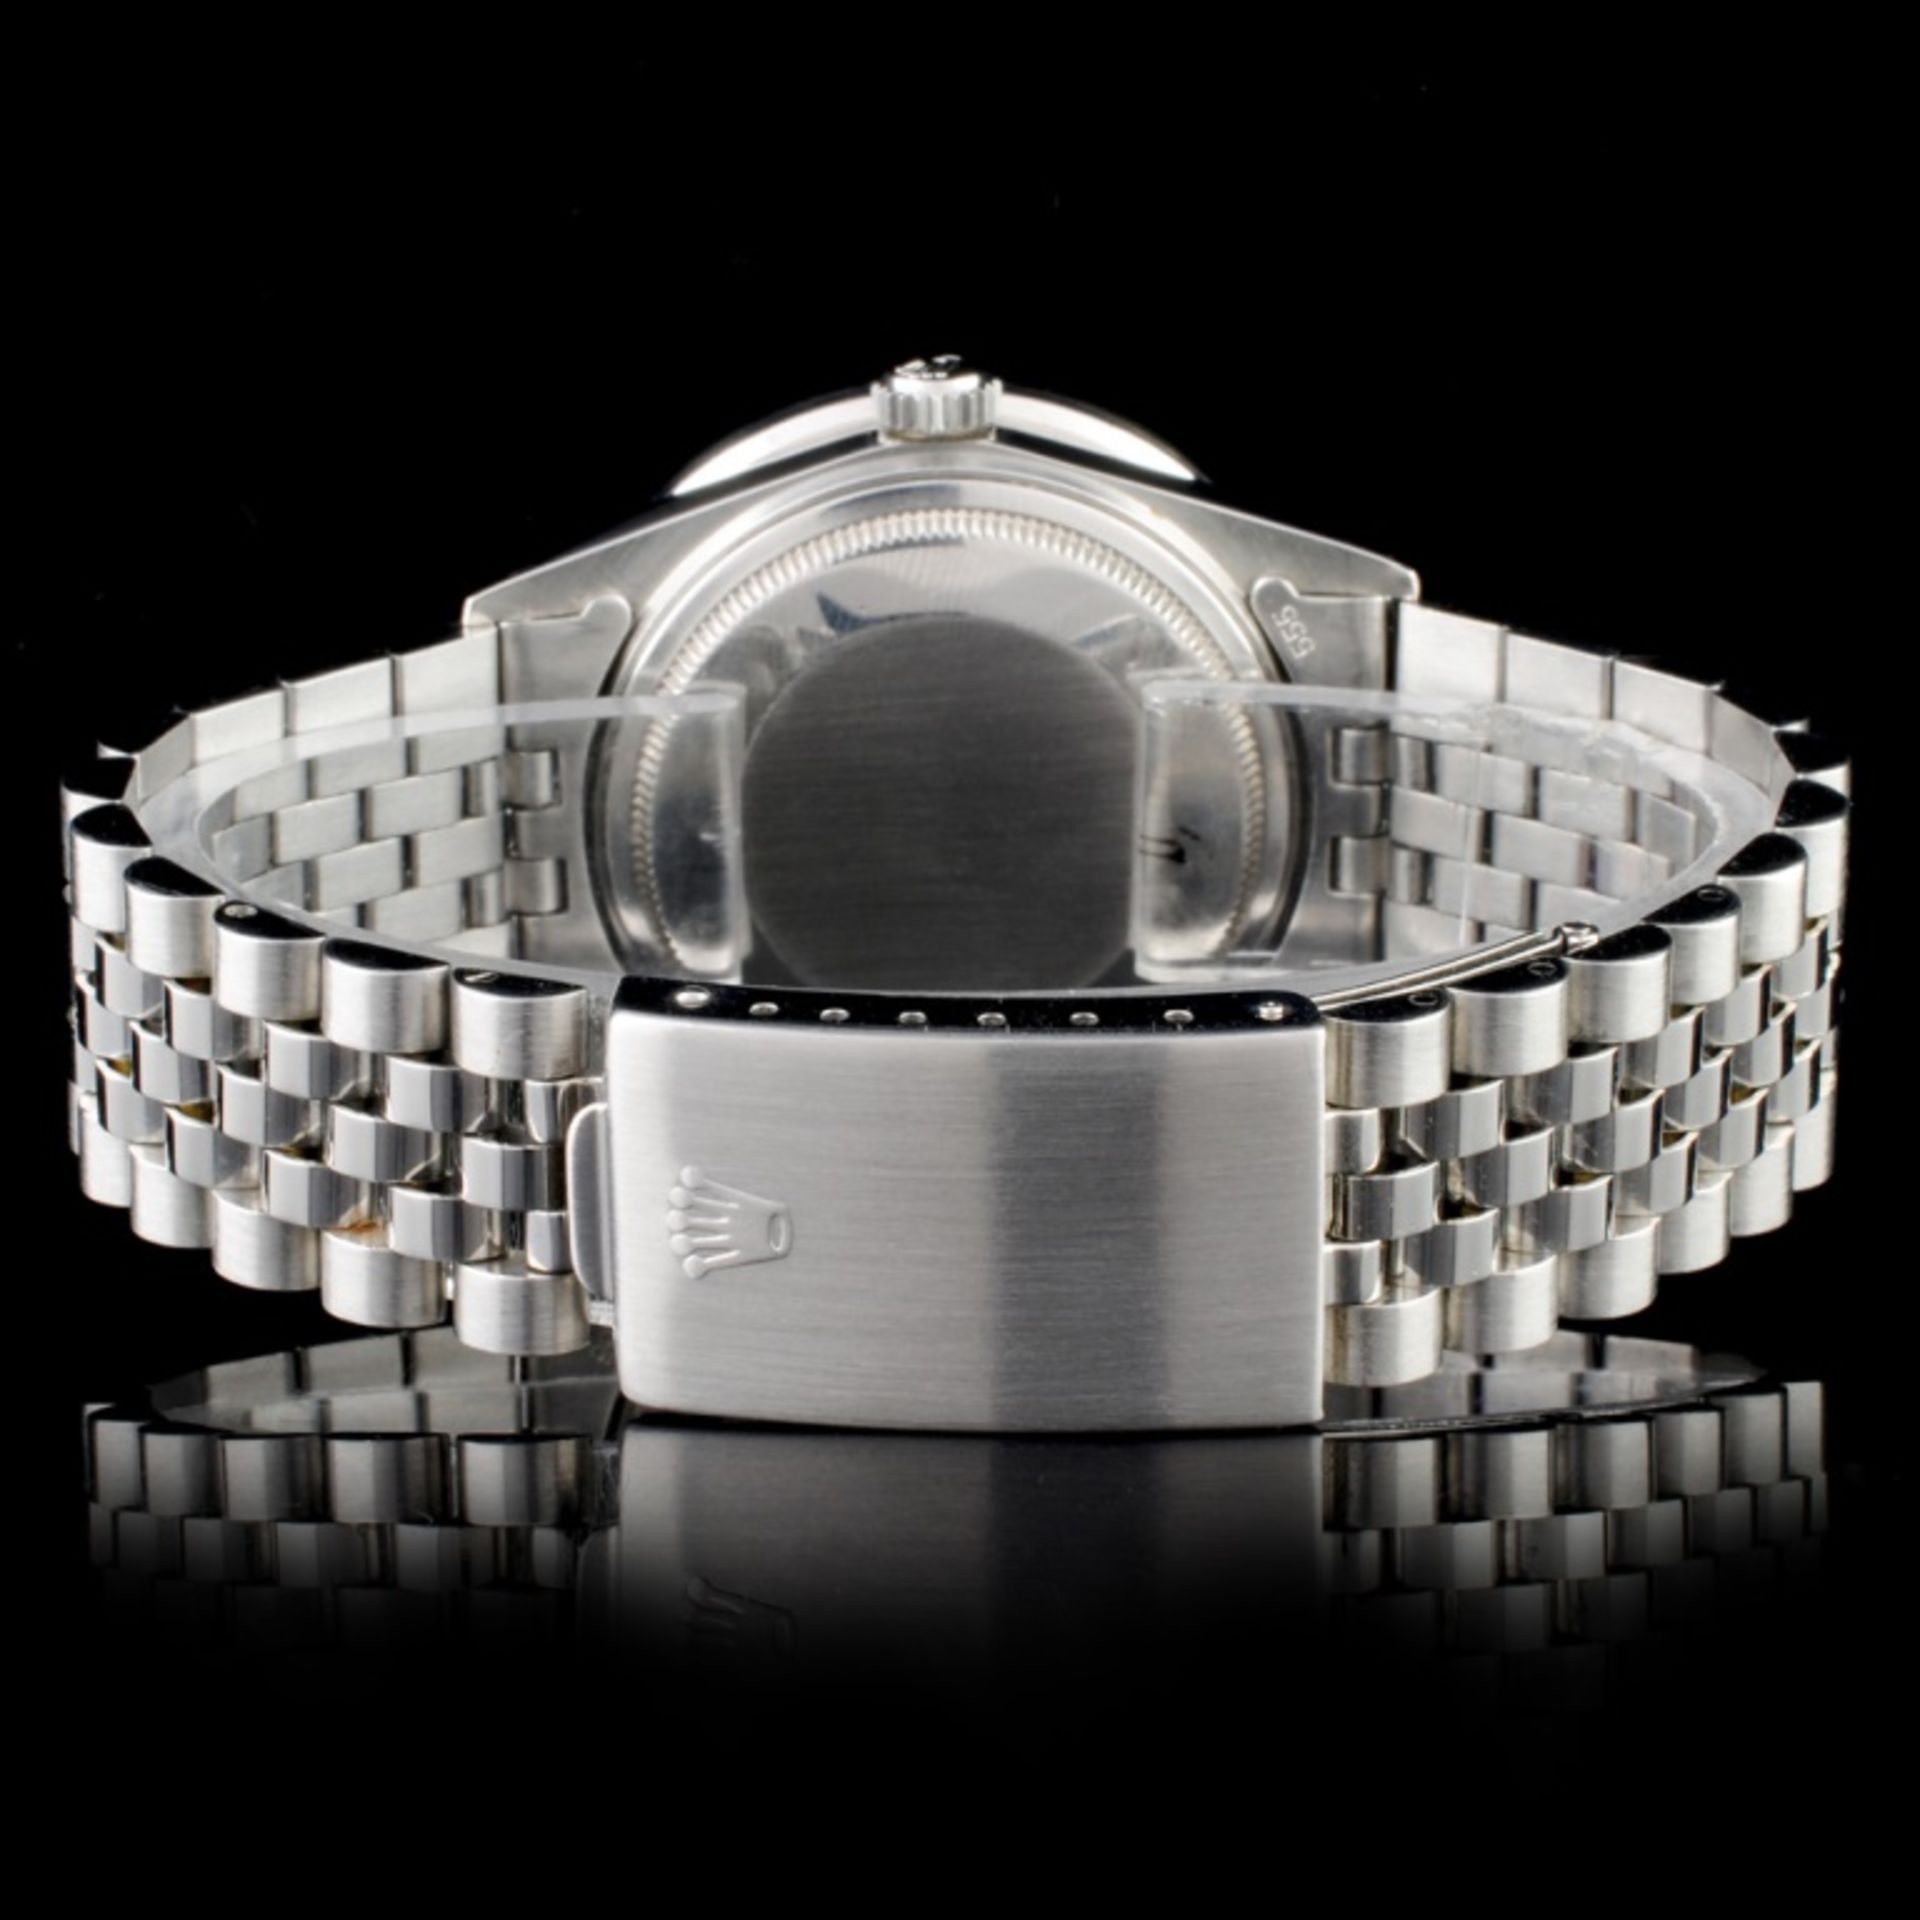 Rolex SS DateJust Diamond Men's Watch - Image 3 of 4